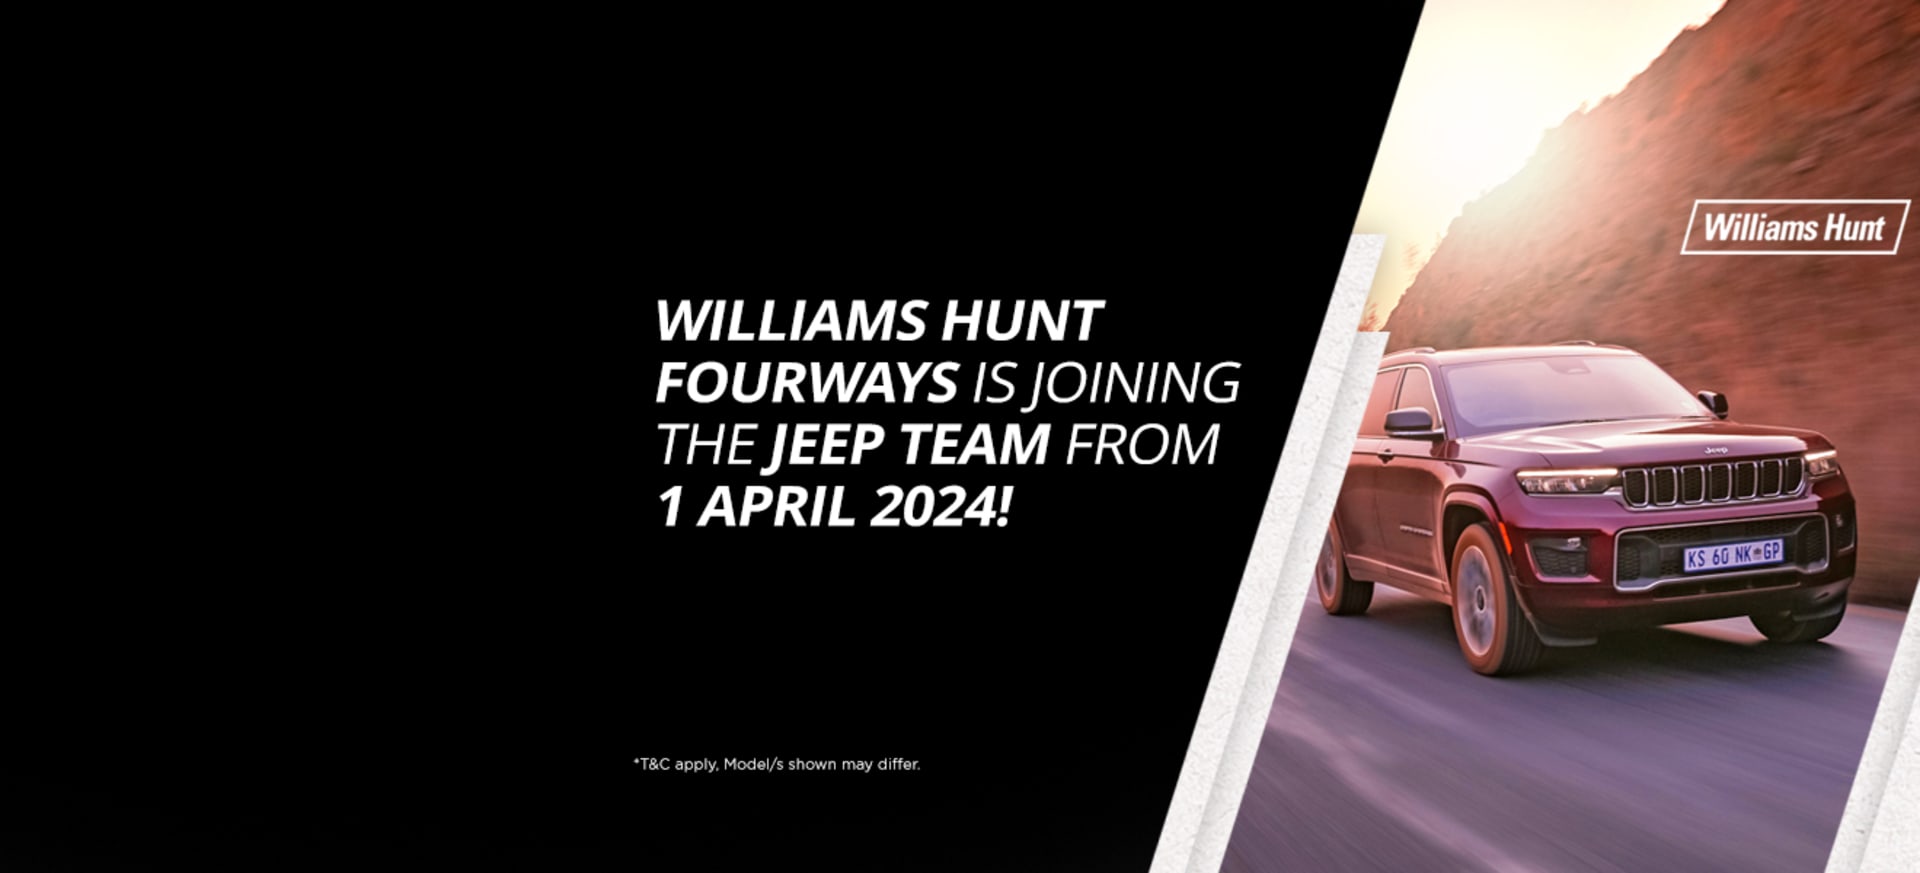 Williams Hunt Fourways Jeep Franchise